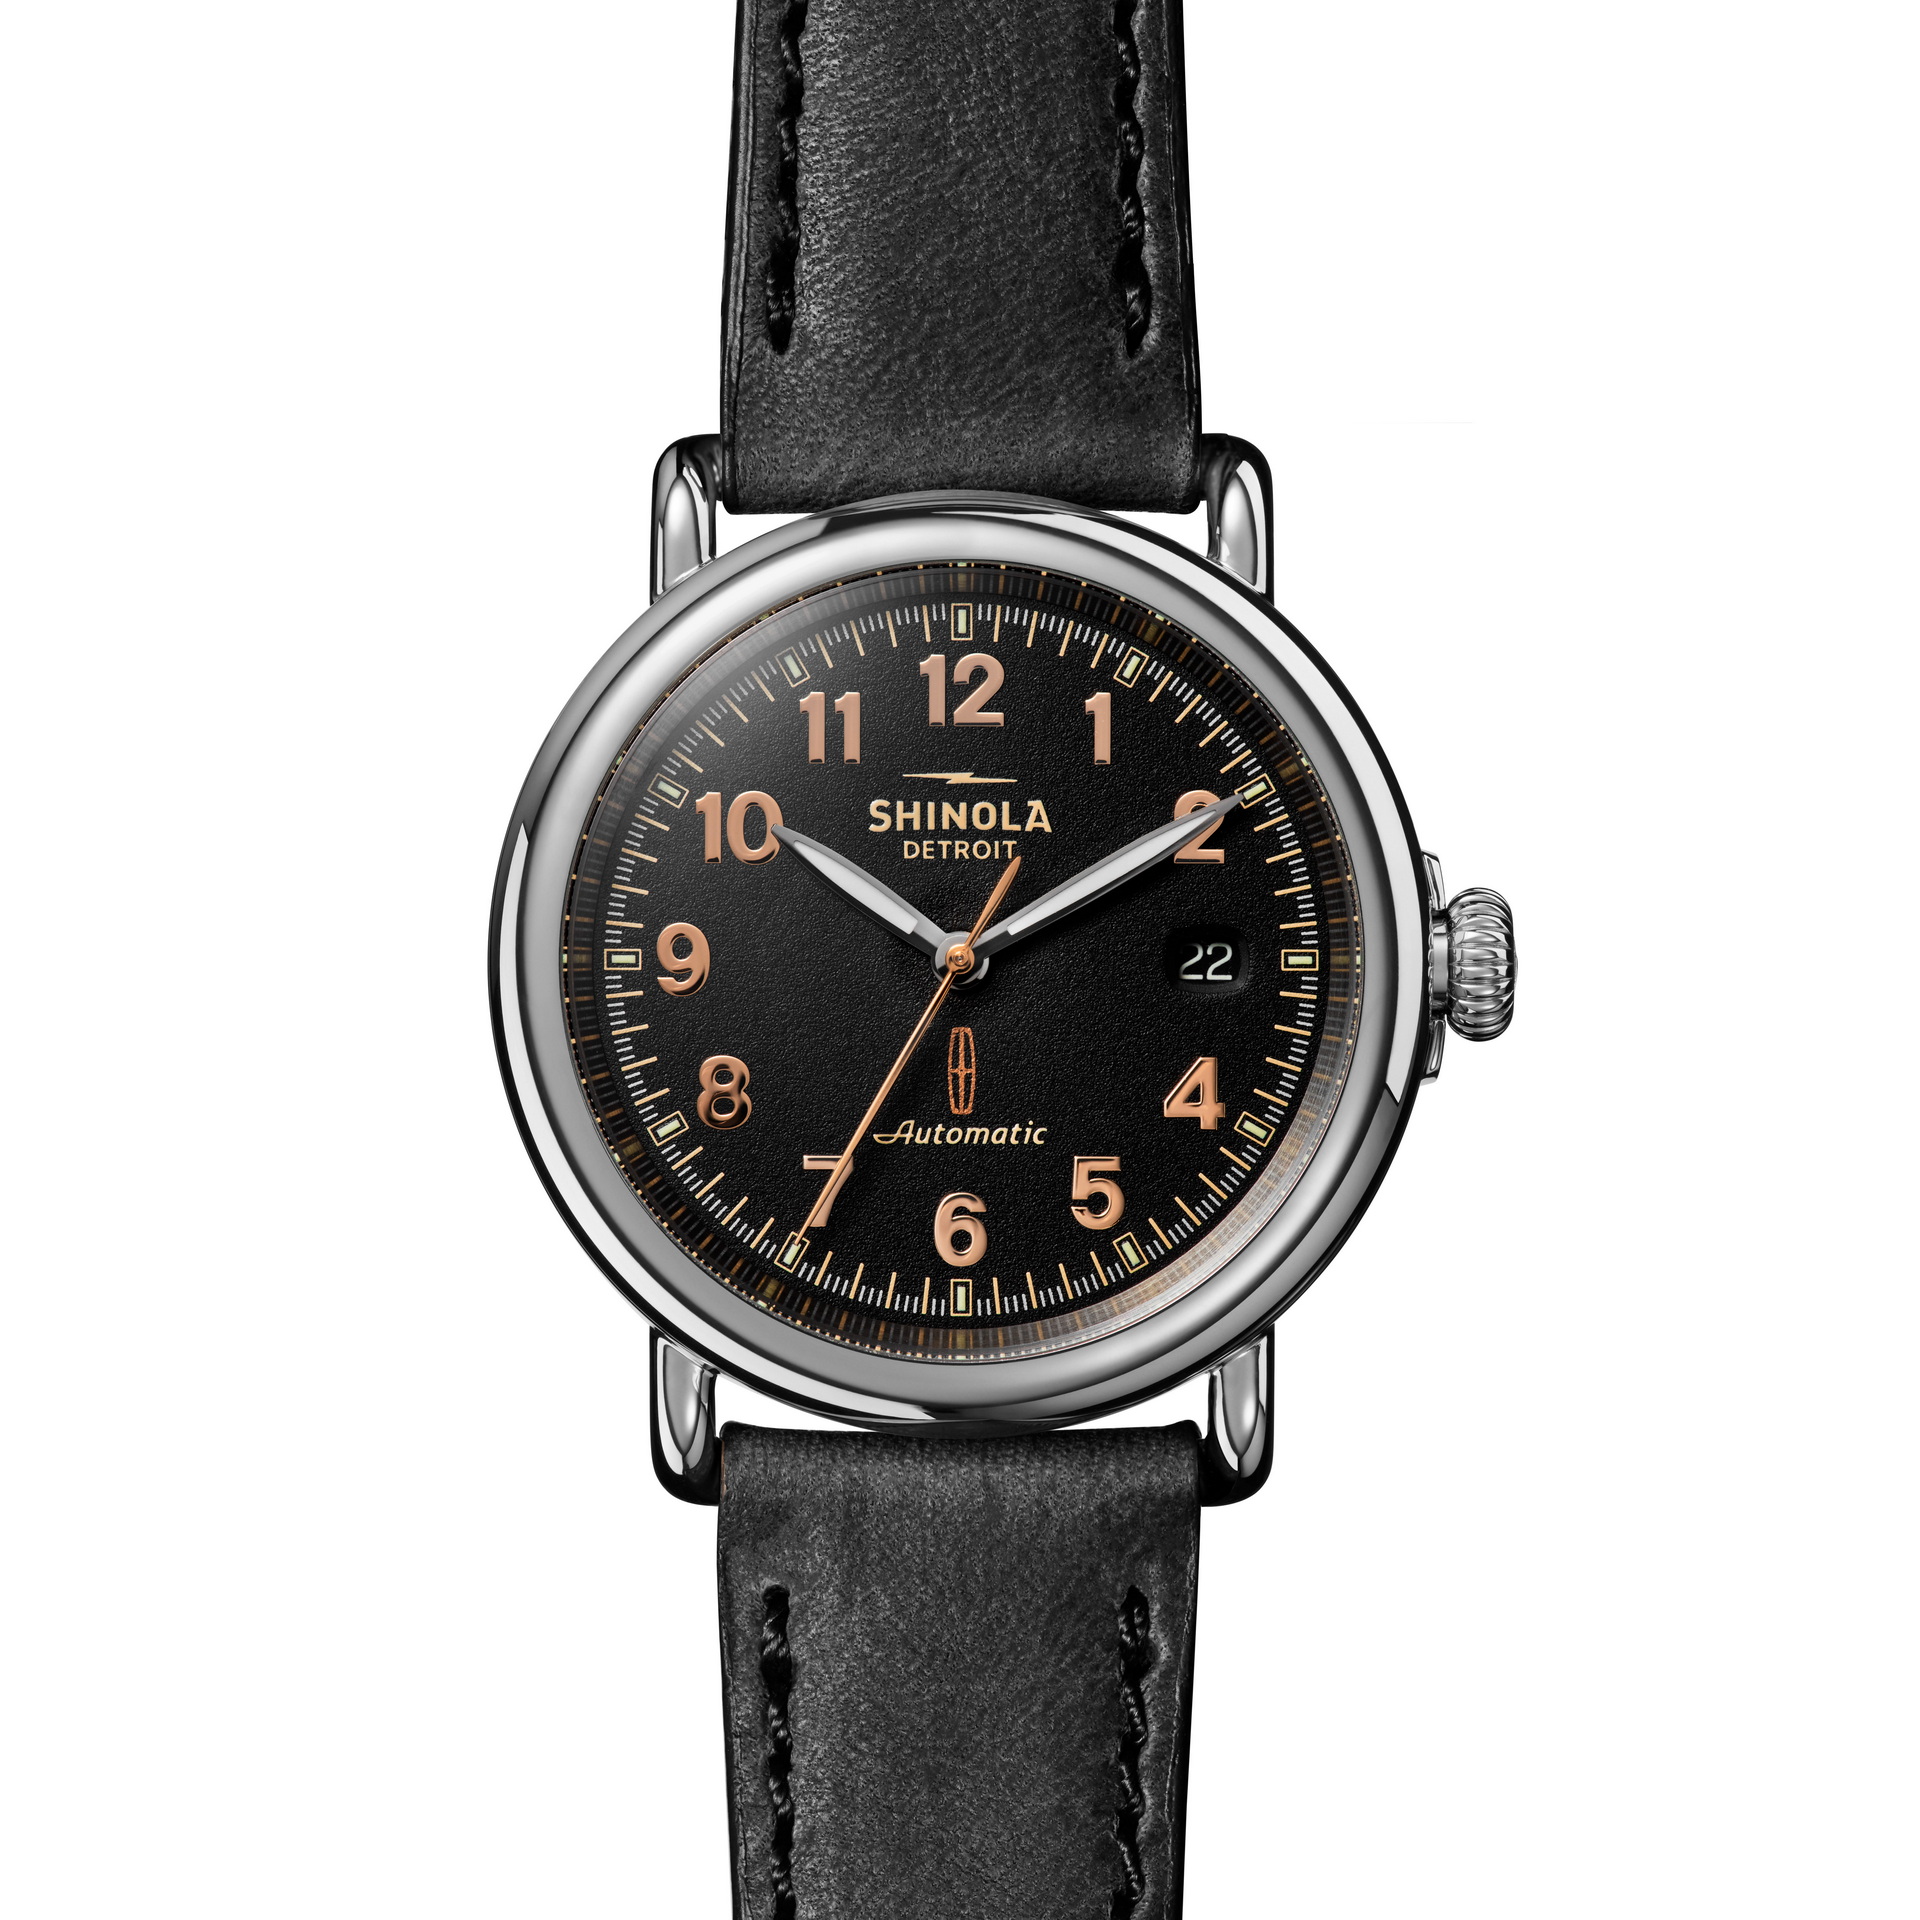 2022-Lincoln-Shinola-Timepieces-9.jpeg